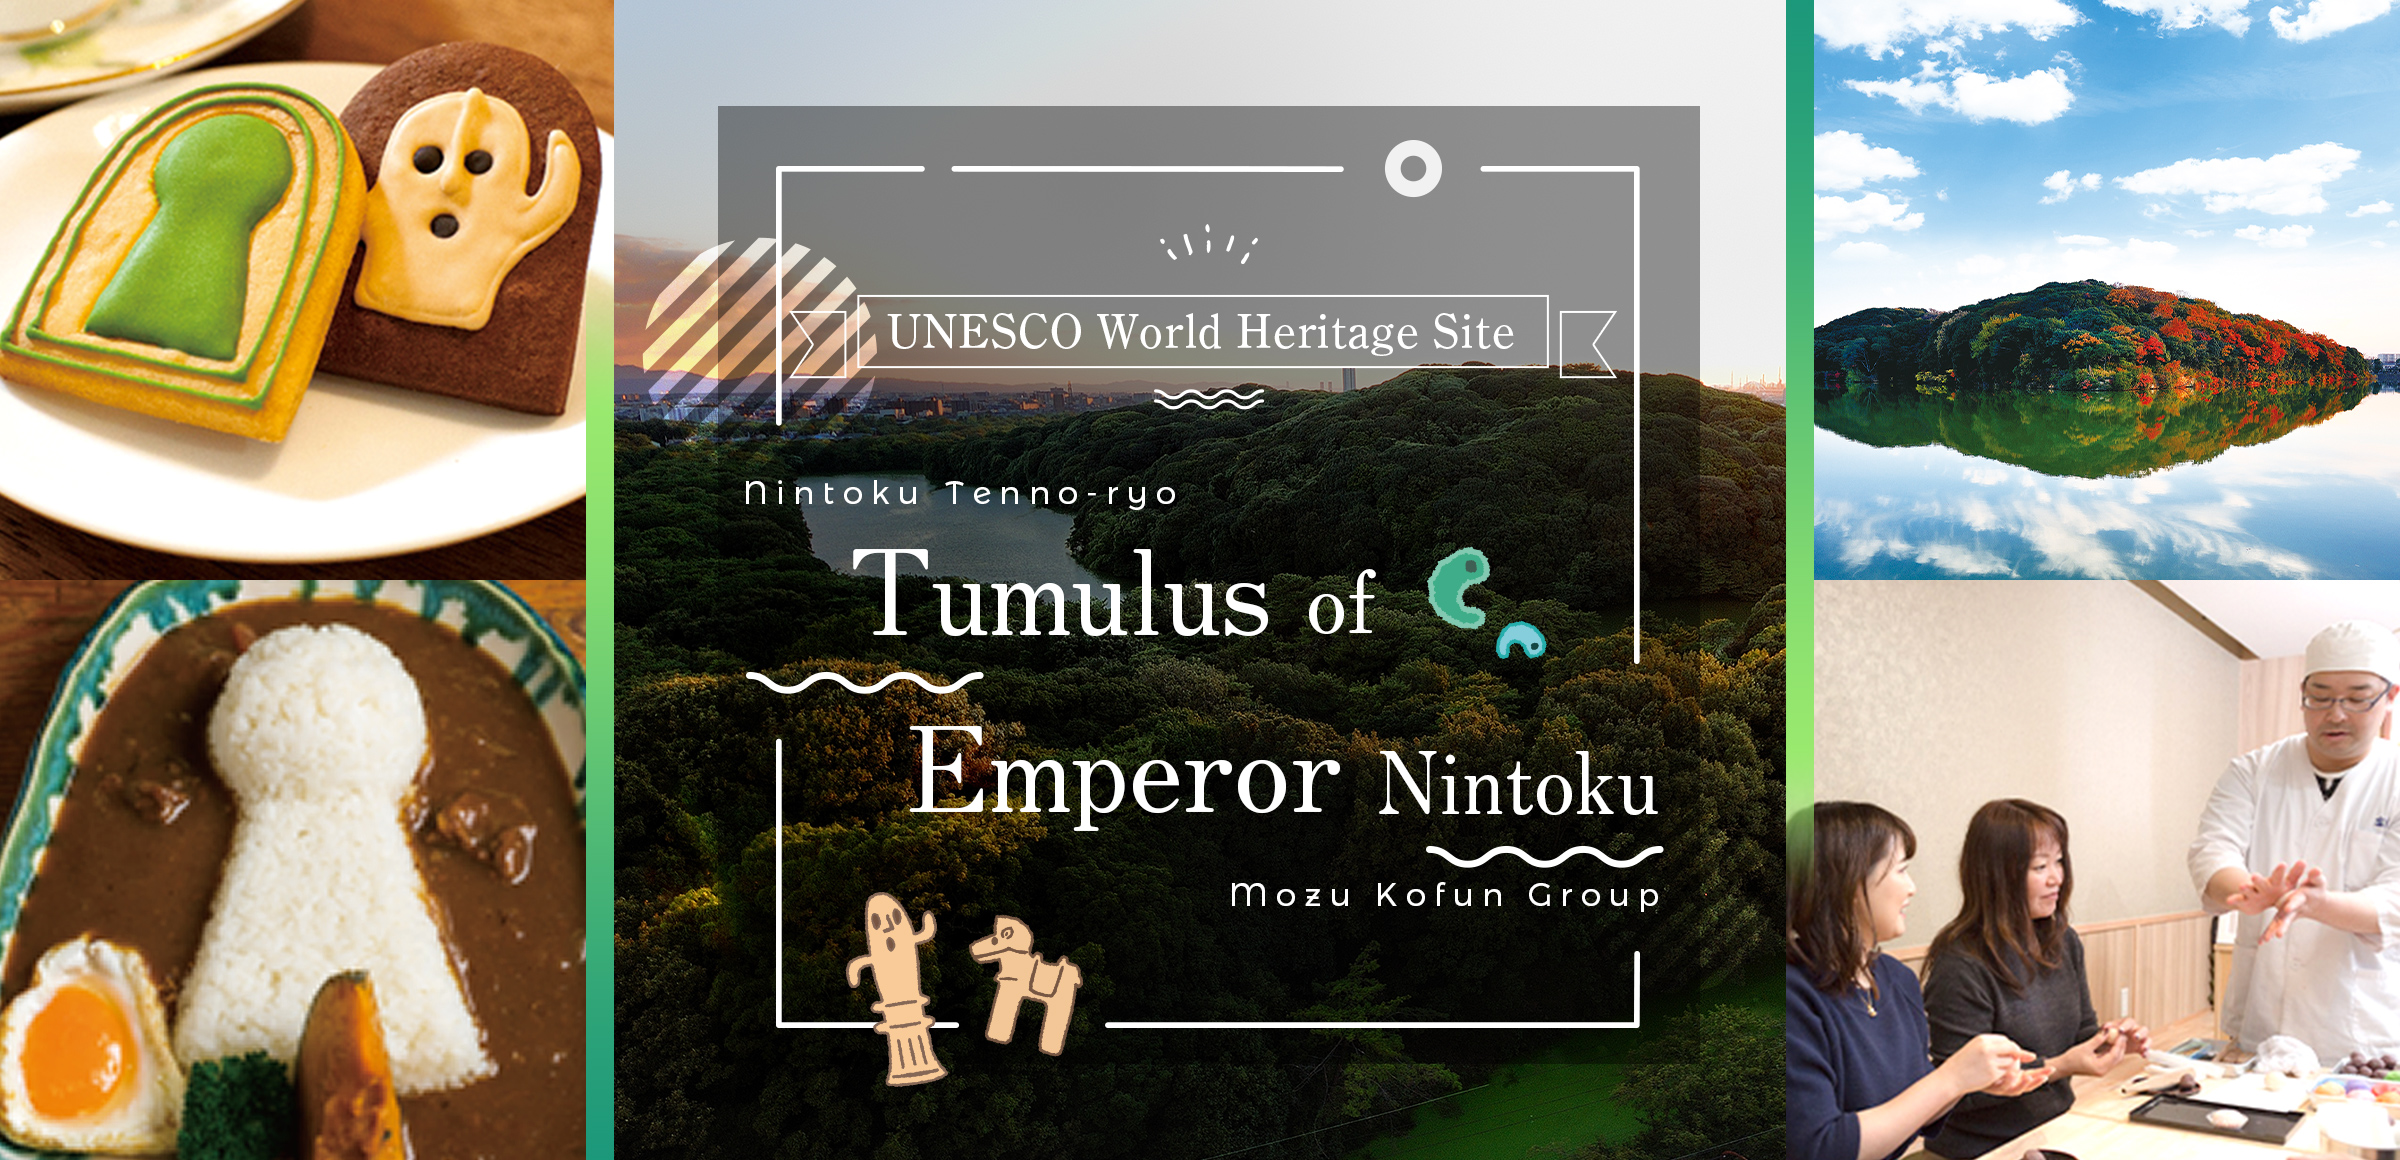 Tumulus of Emperor Nintoku (UNESCO World Heritage Site) and Mozu Tumulus Cluster